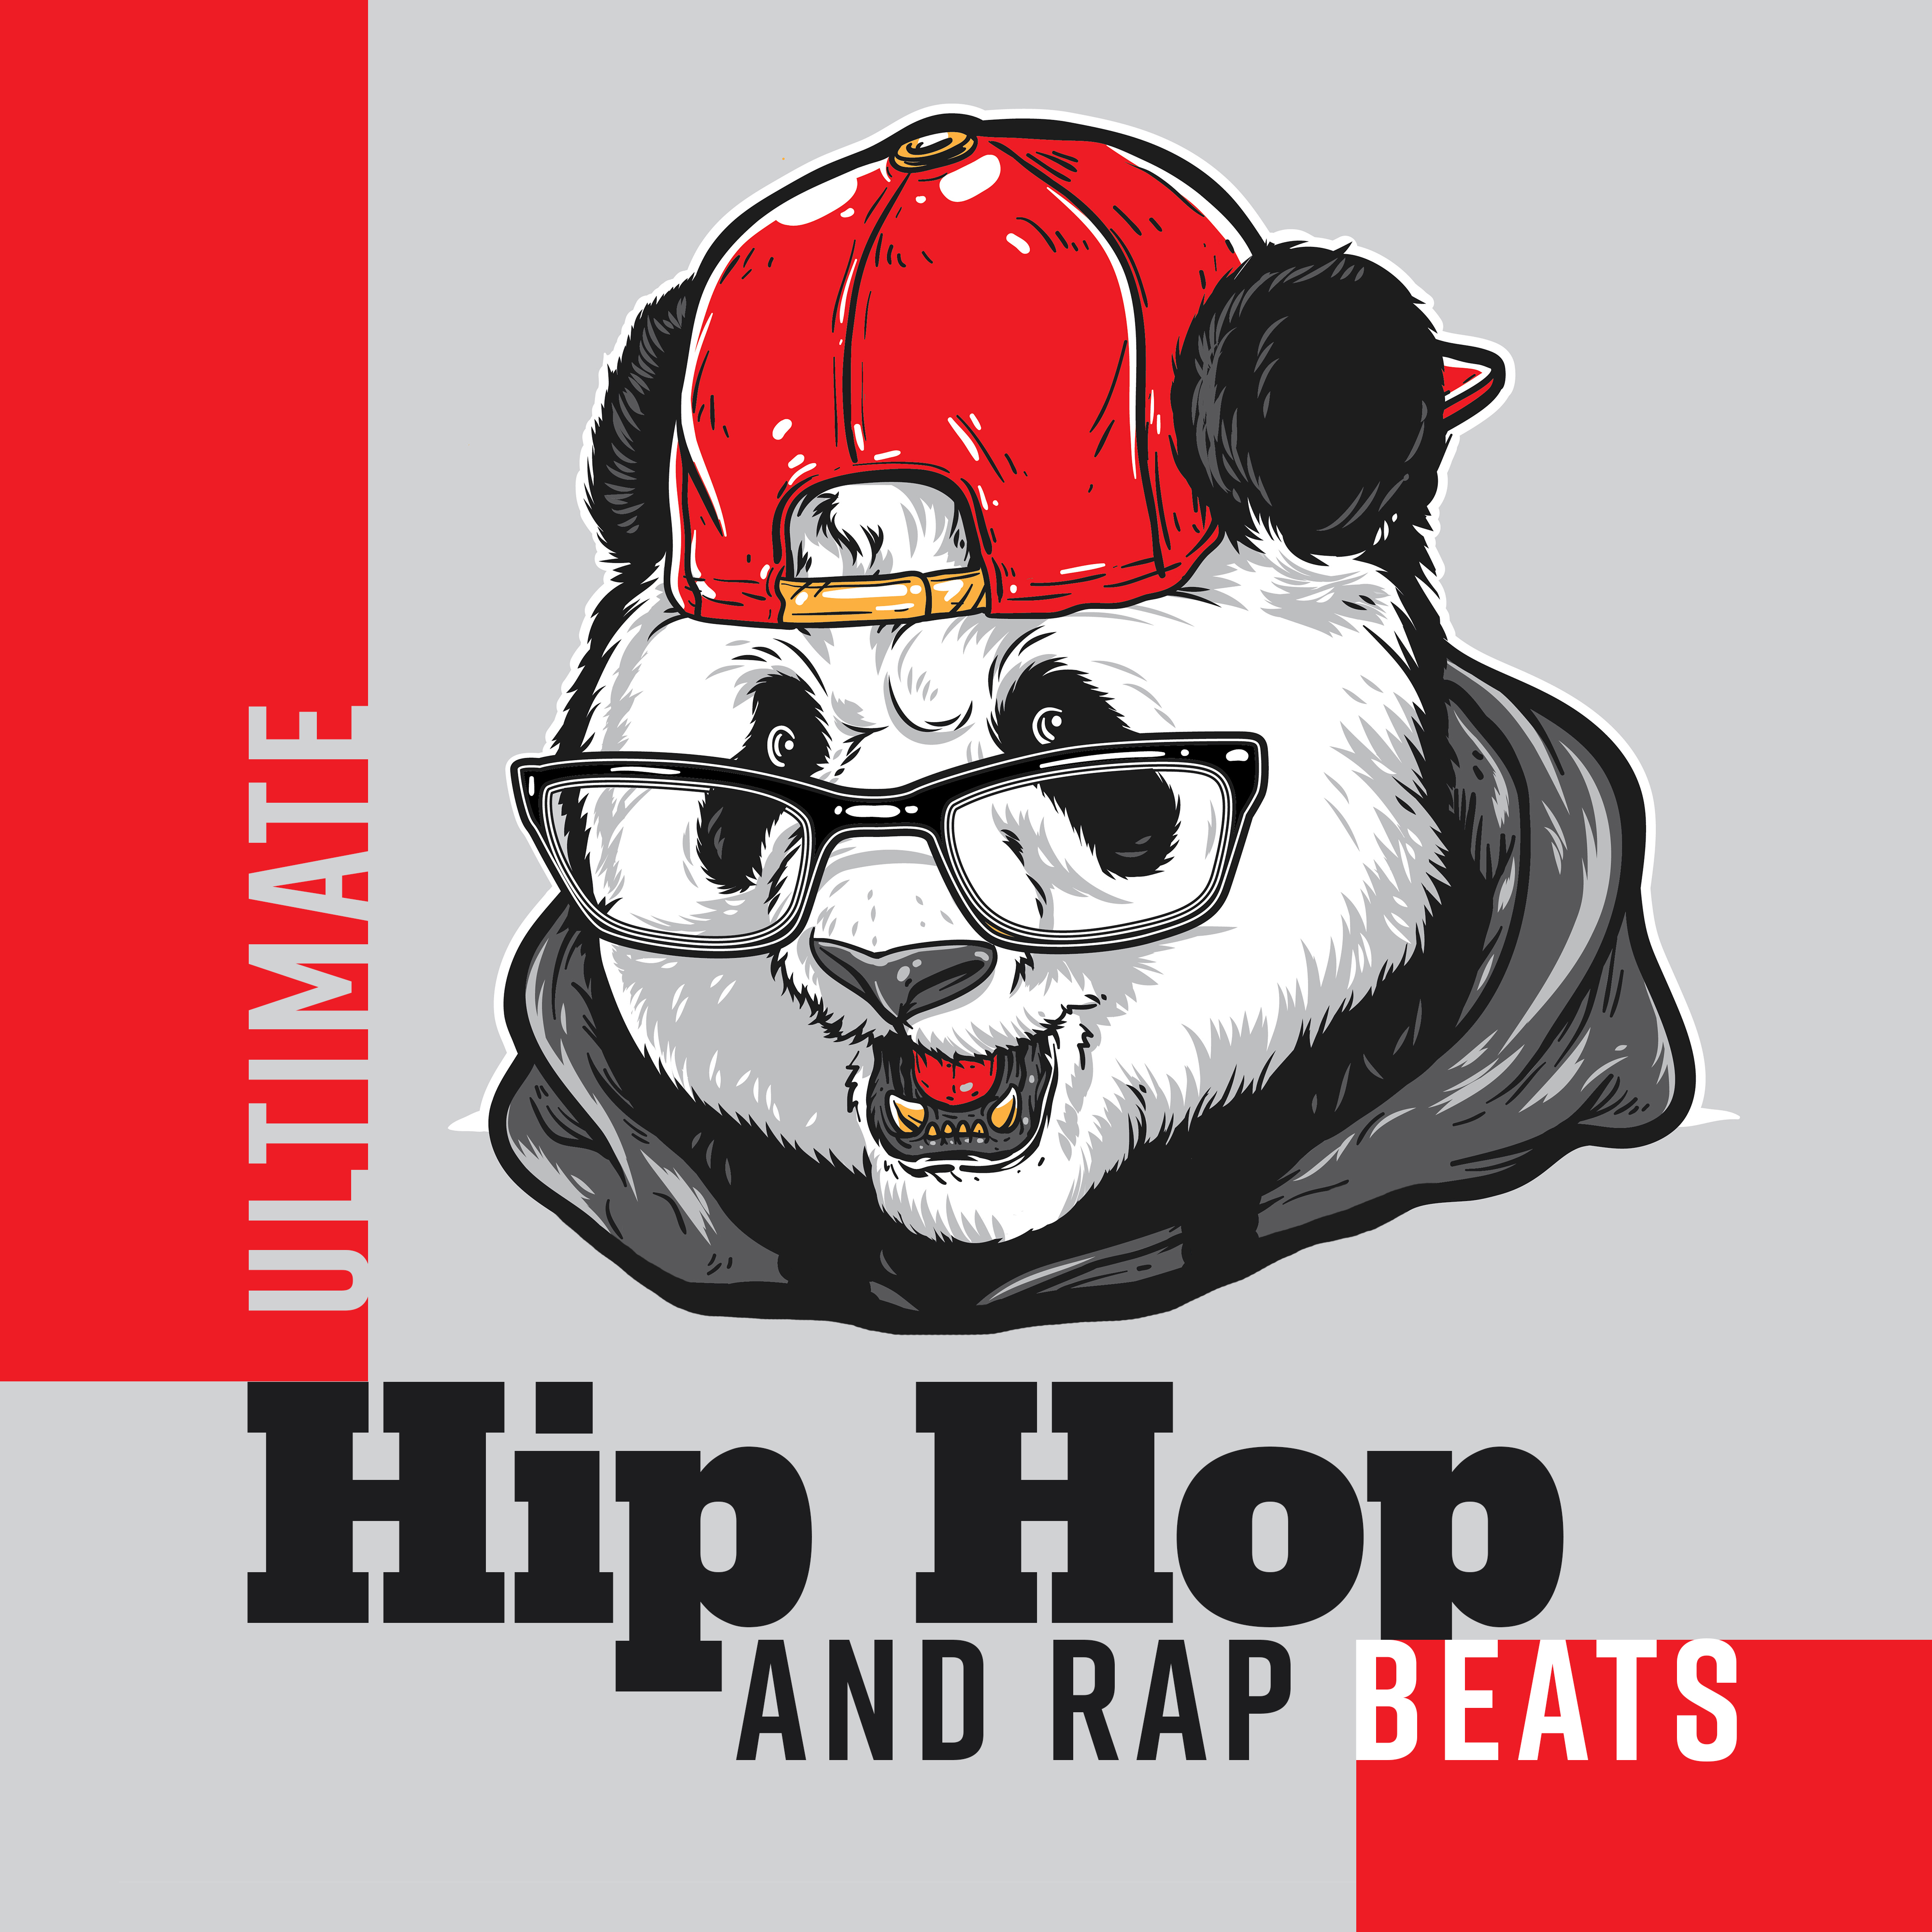 Ultimate Hip Hop and Rap Beats